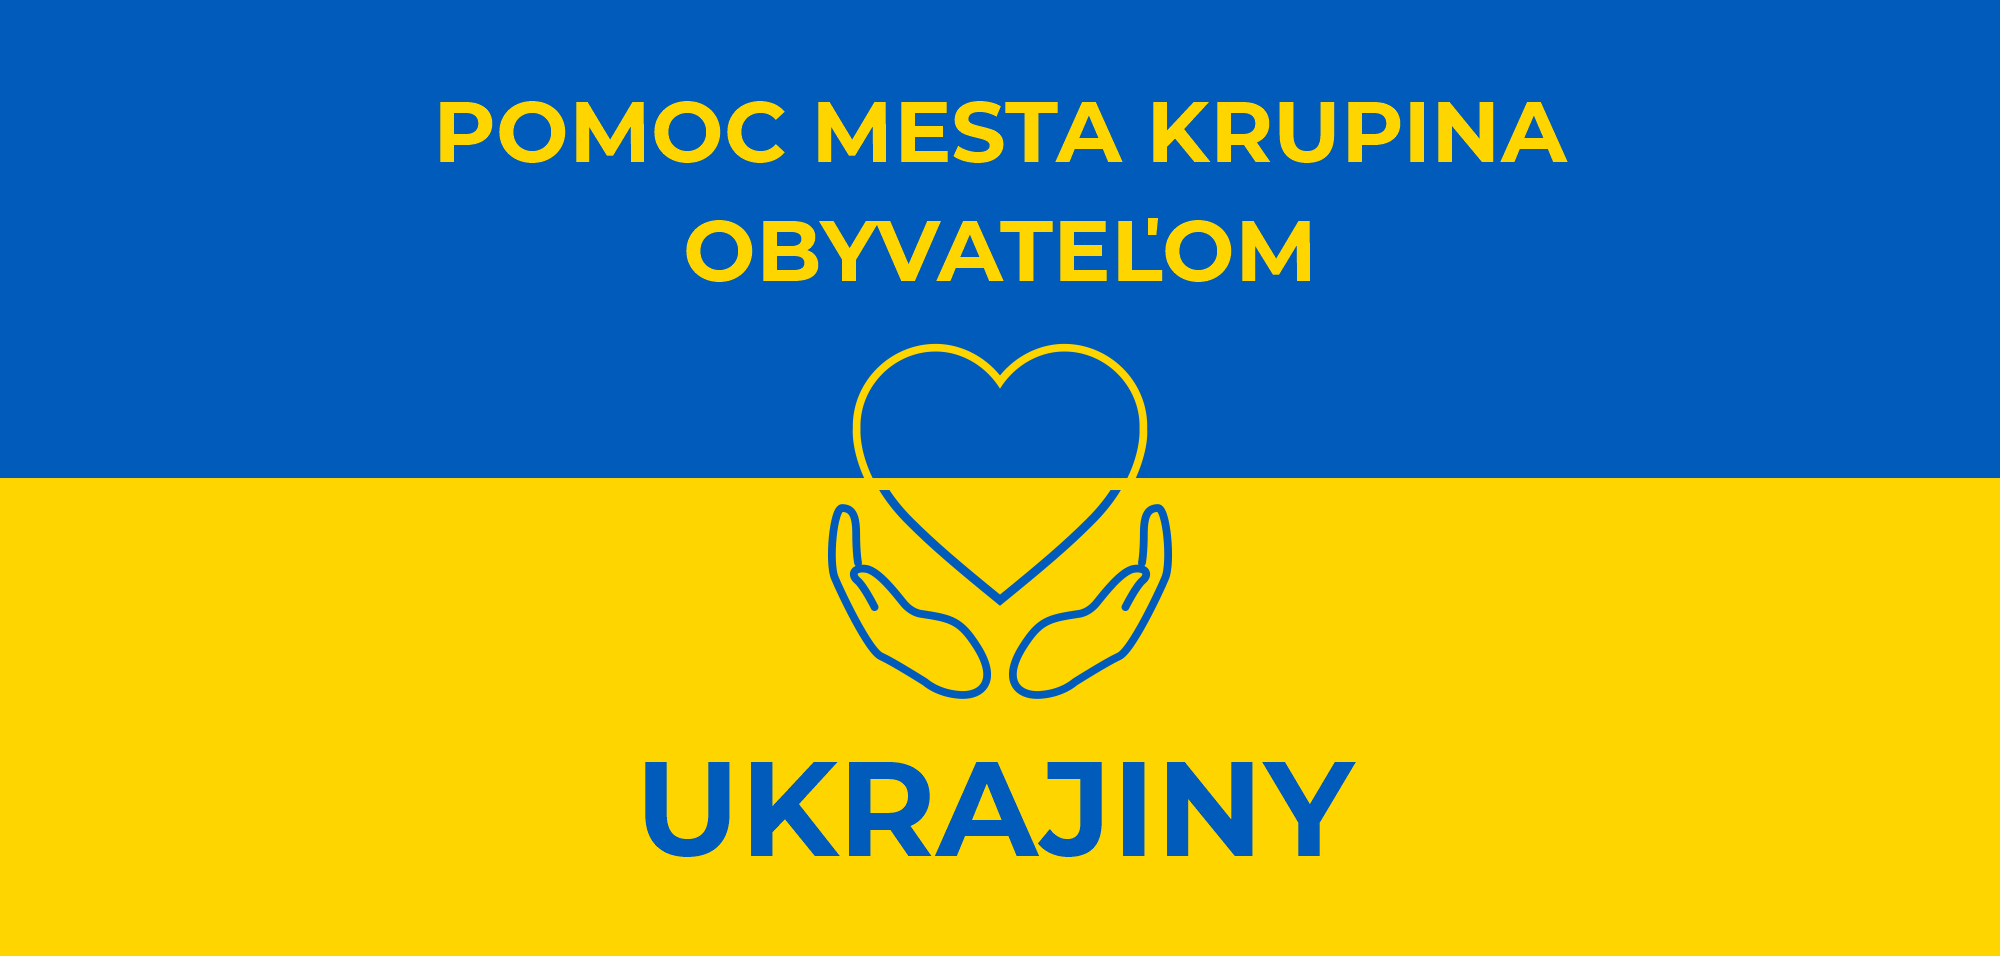 informácie o pomoci mesta Krupina Ukrajine